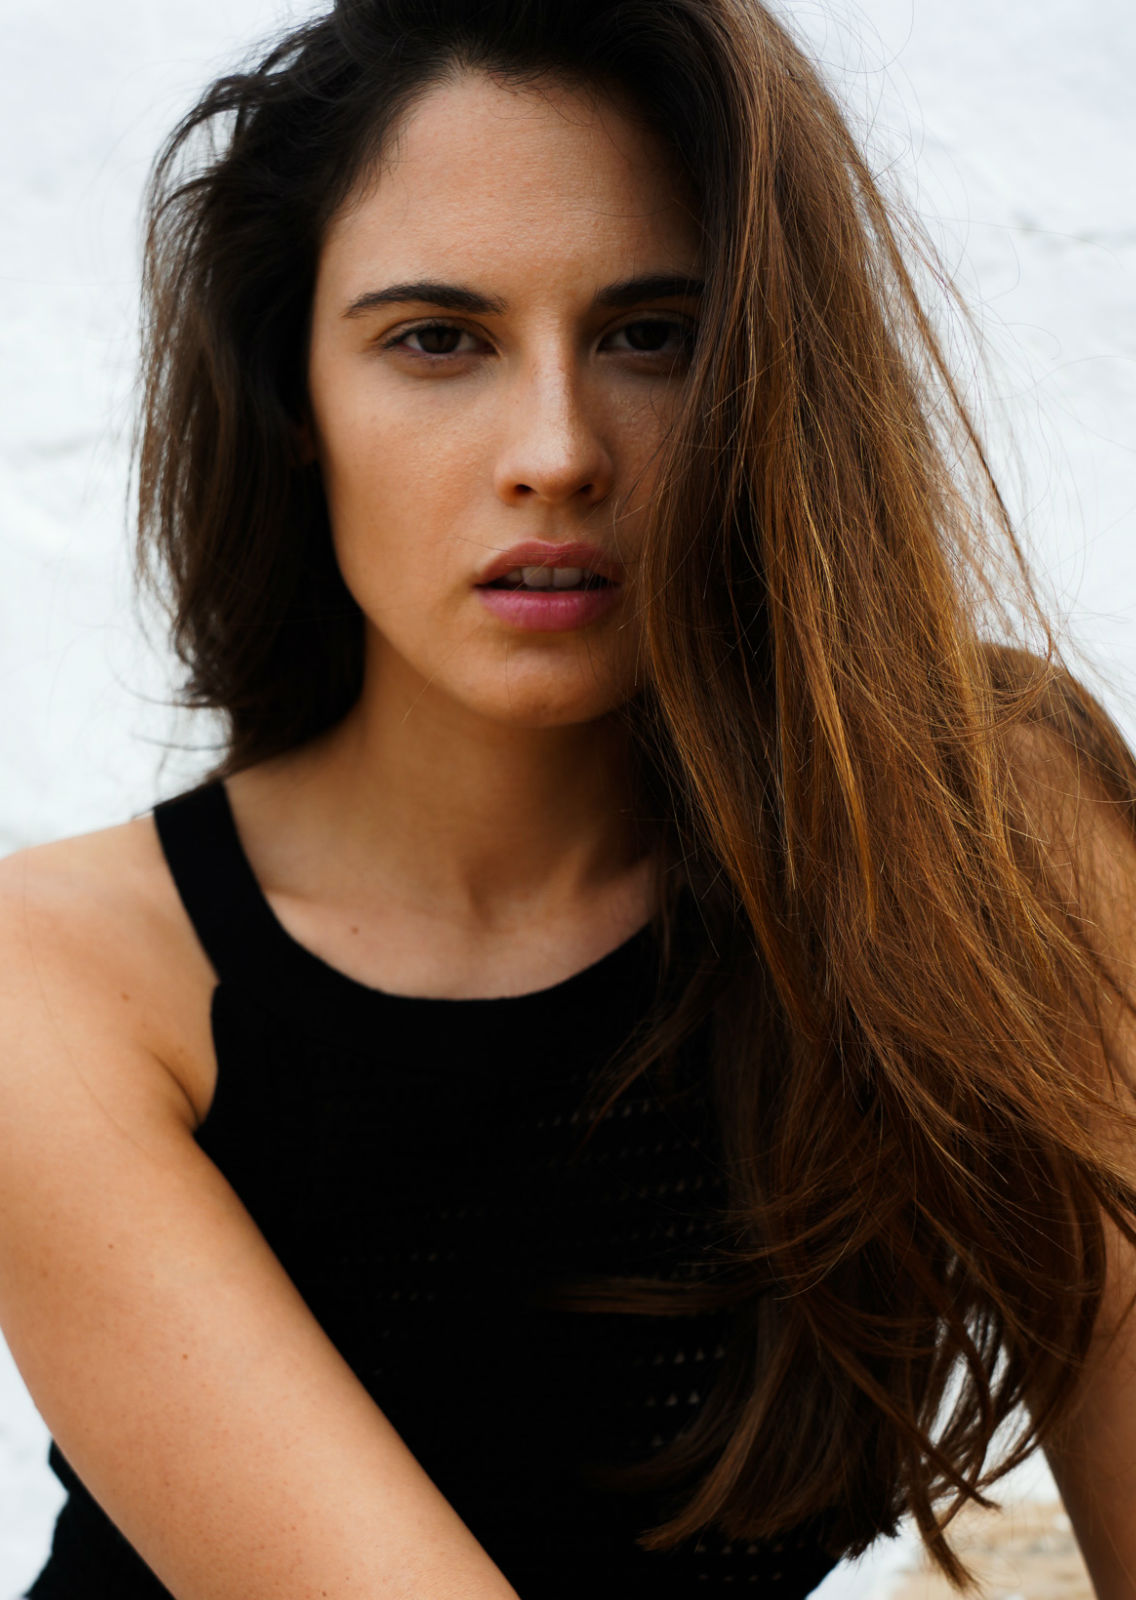 ESTHER BLASCO . Carmen Duran Model Agency.